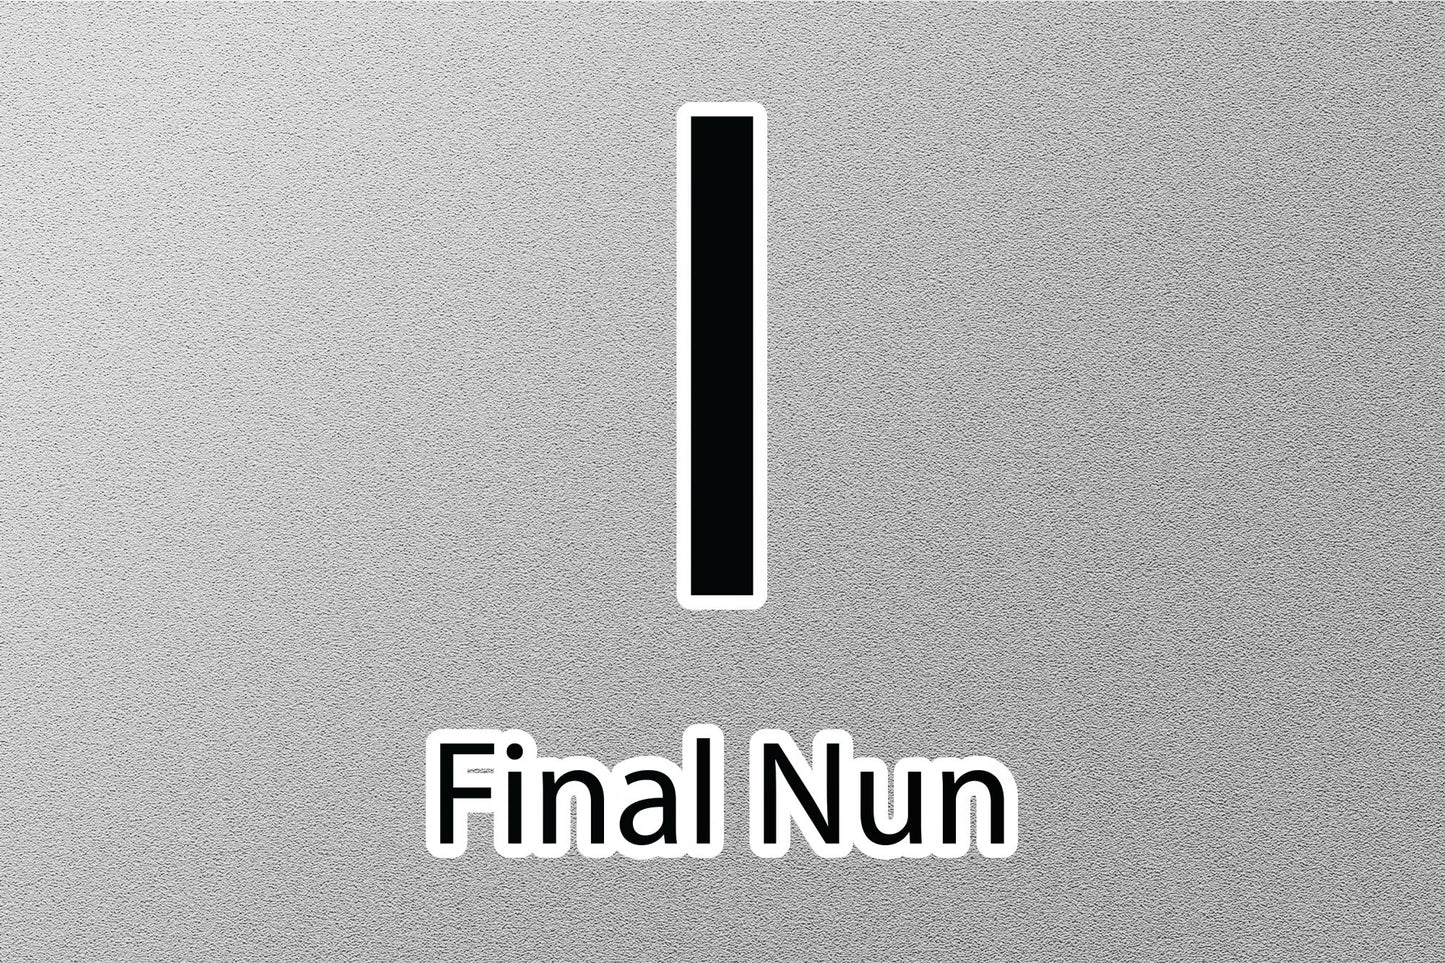 Final Nun Hebrew Alphabet Sticker